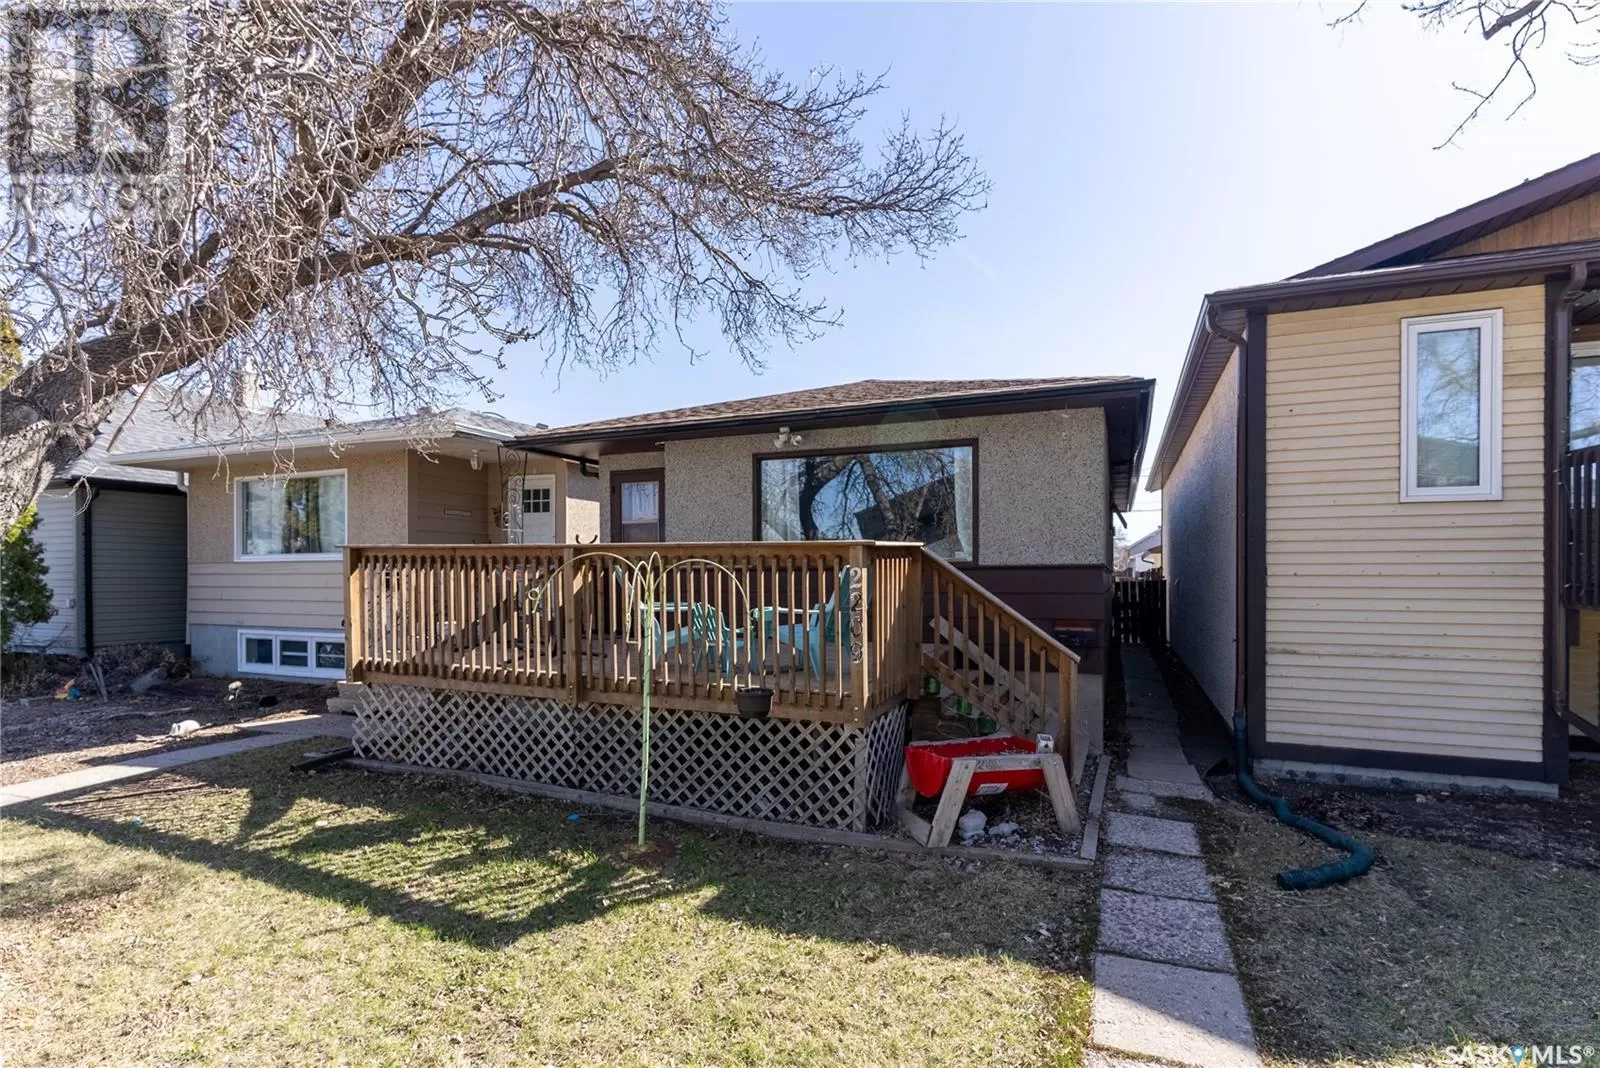 House for rent: 2209 Lindsay Street, Regina, Saskatchewan S4N 3C2